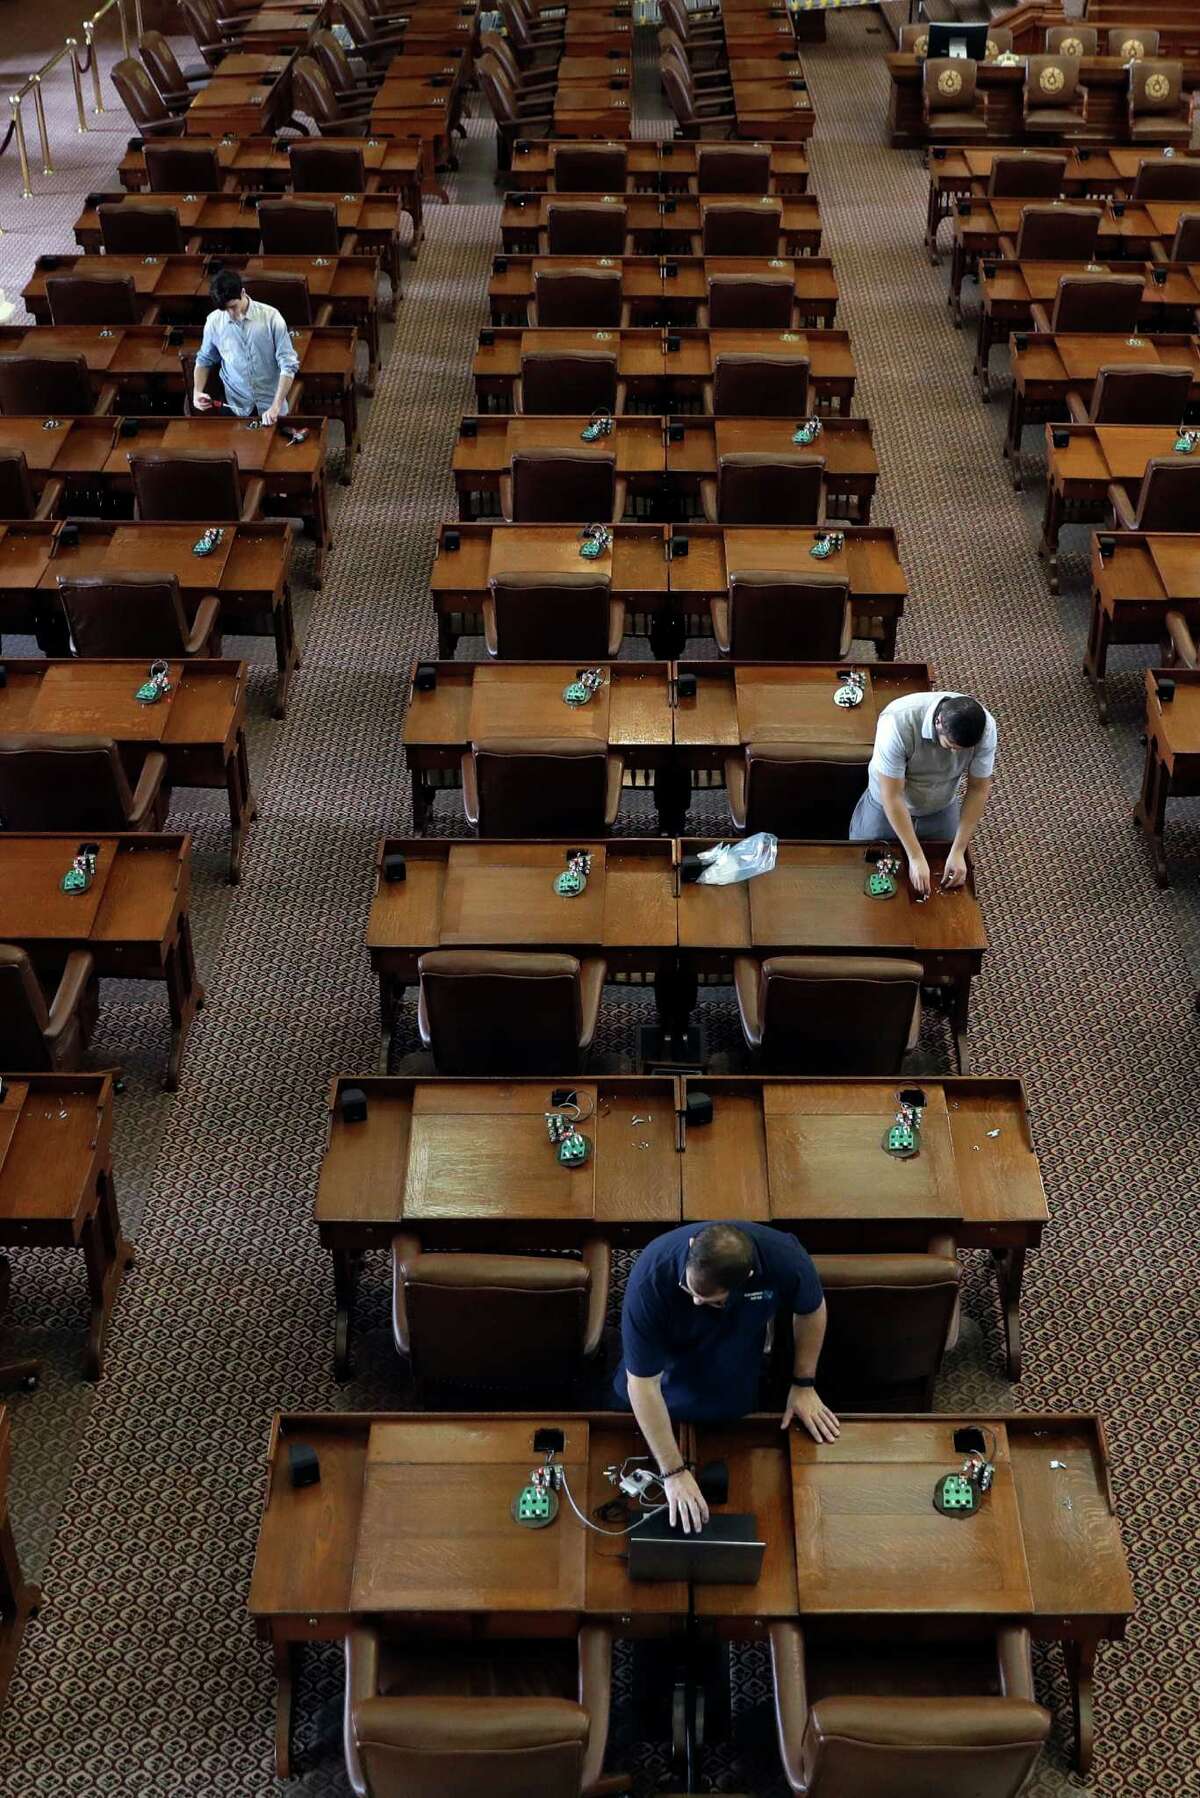 Rows of legislators' desks in the Texas House after the Texas Legislature adjourned on Monday.